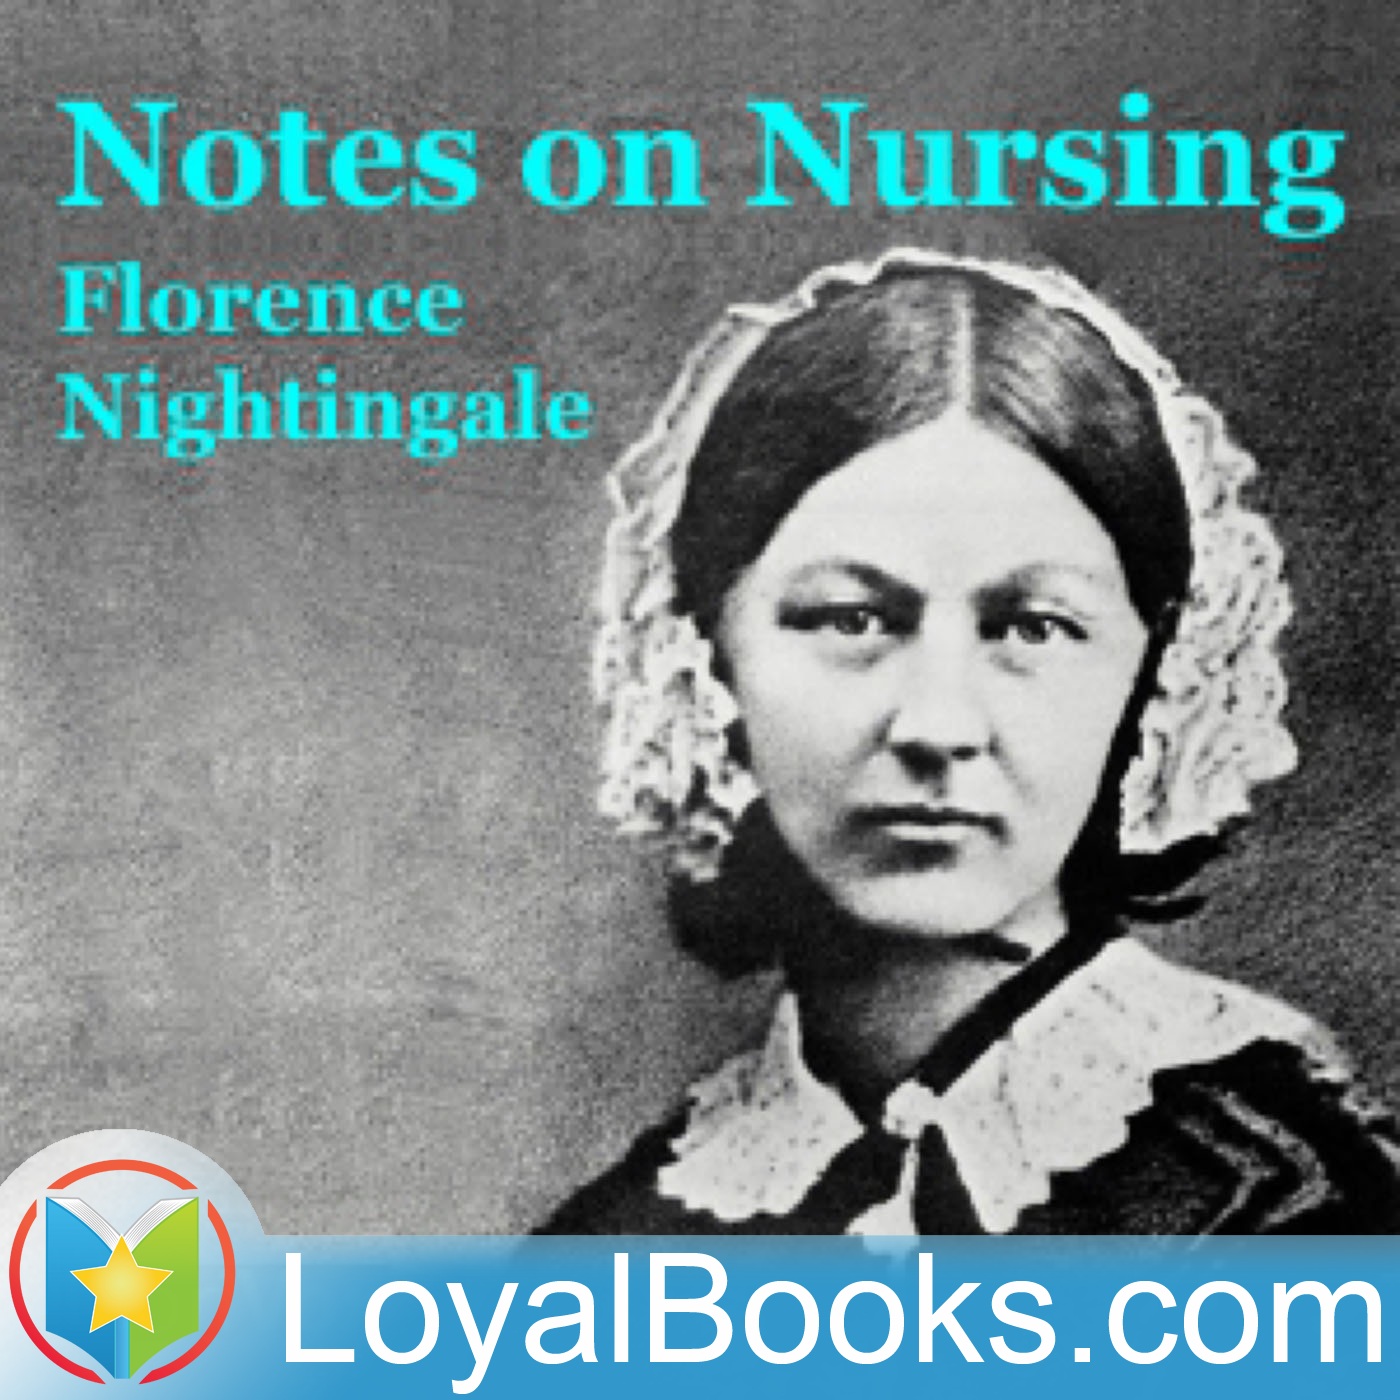 Notes on Nursing by Florence Nightingale